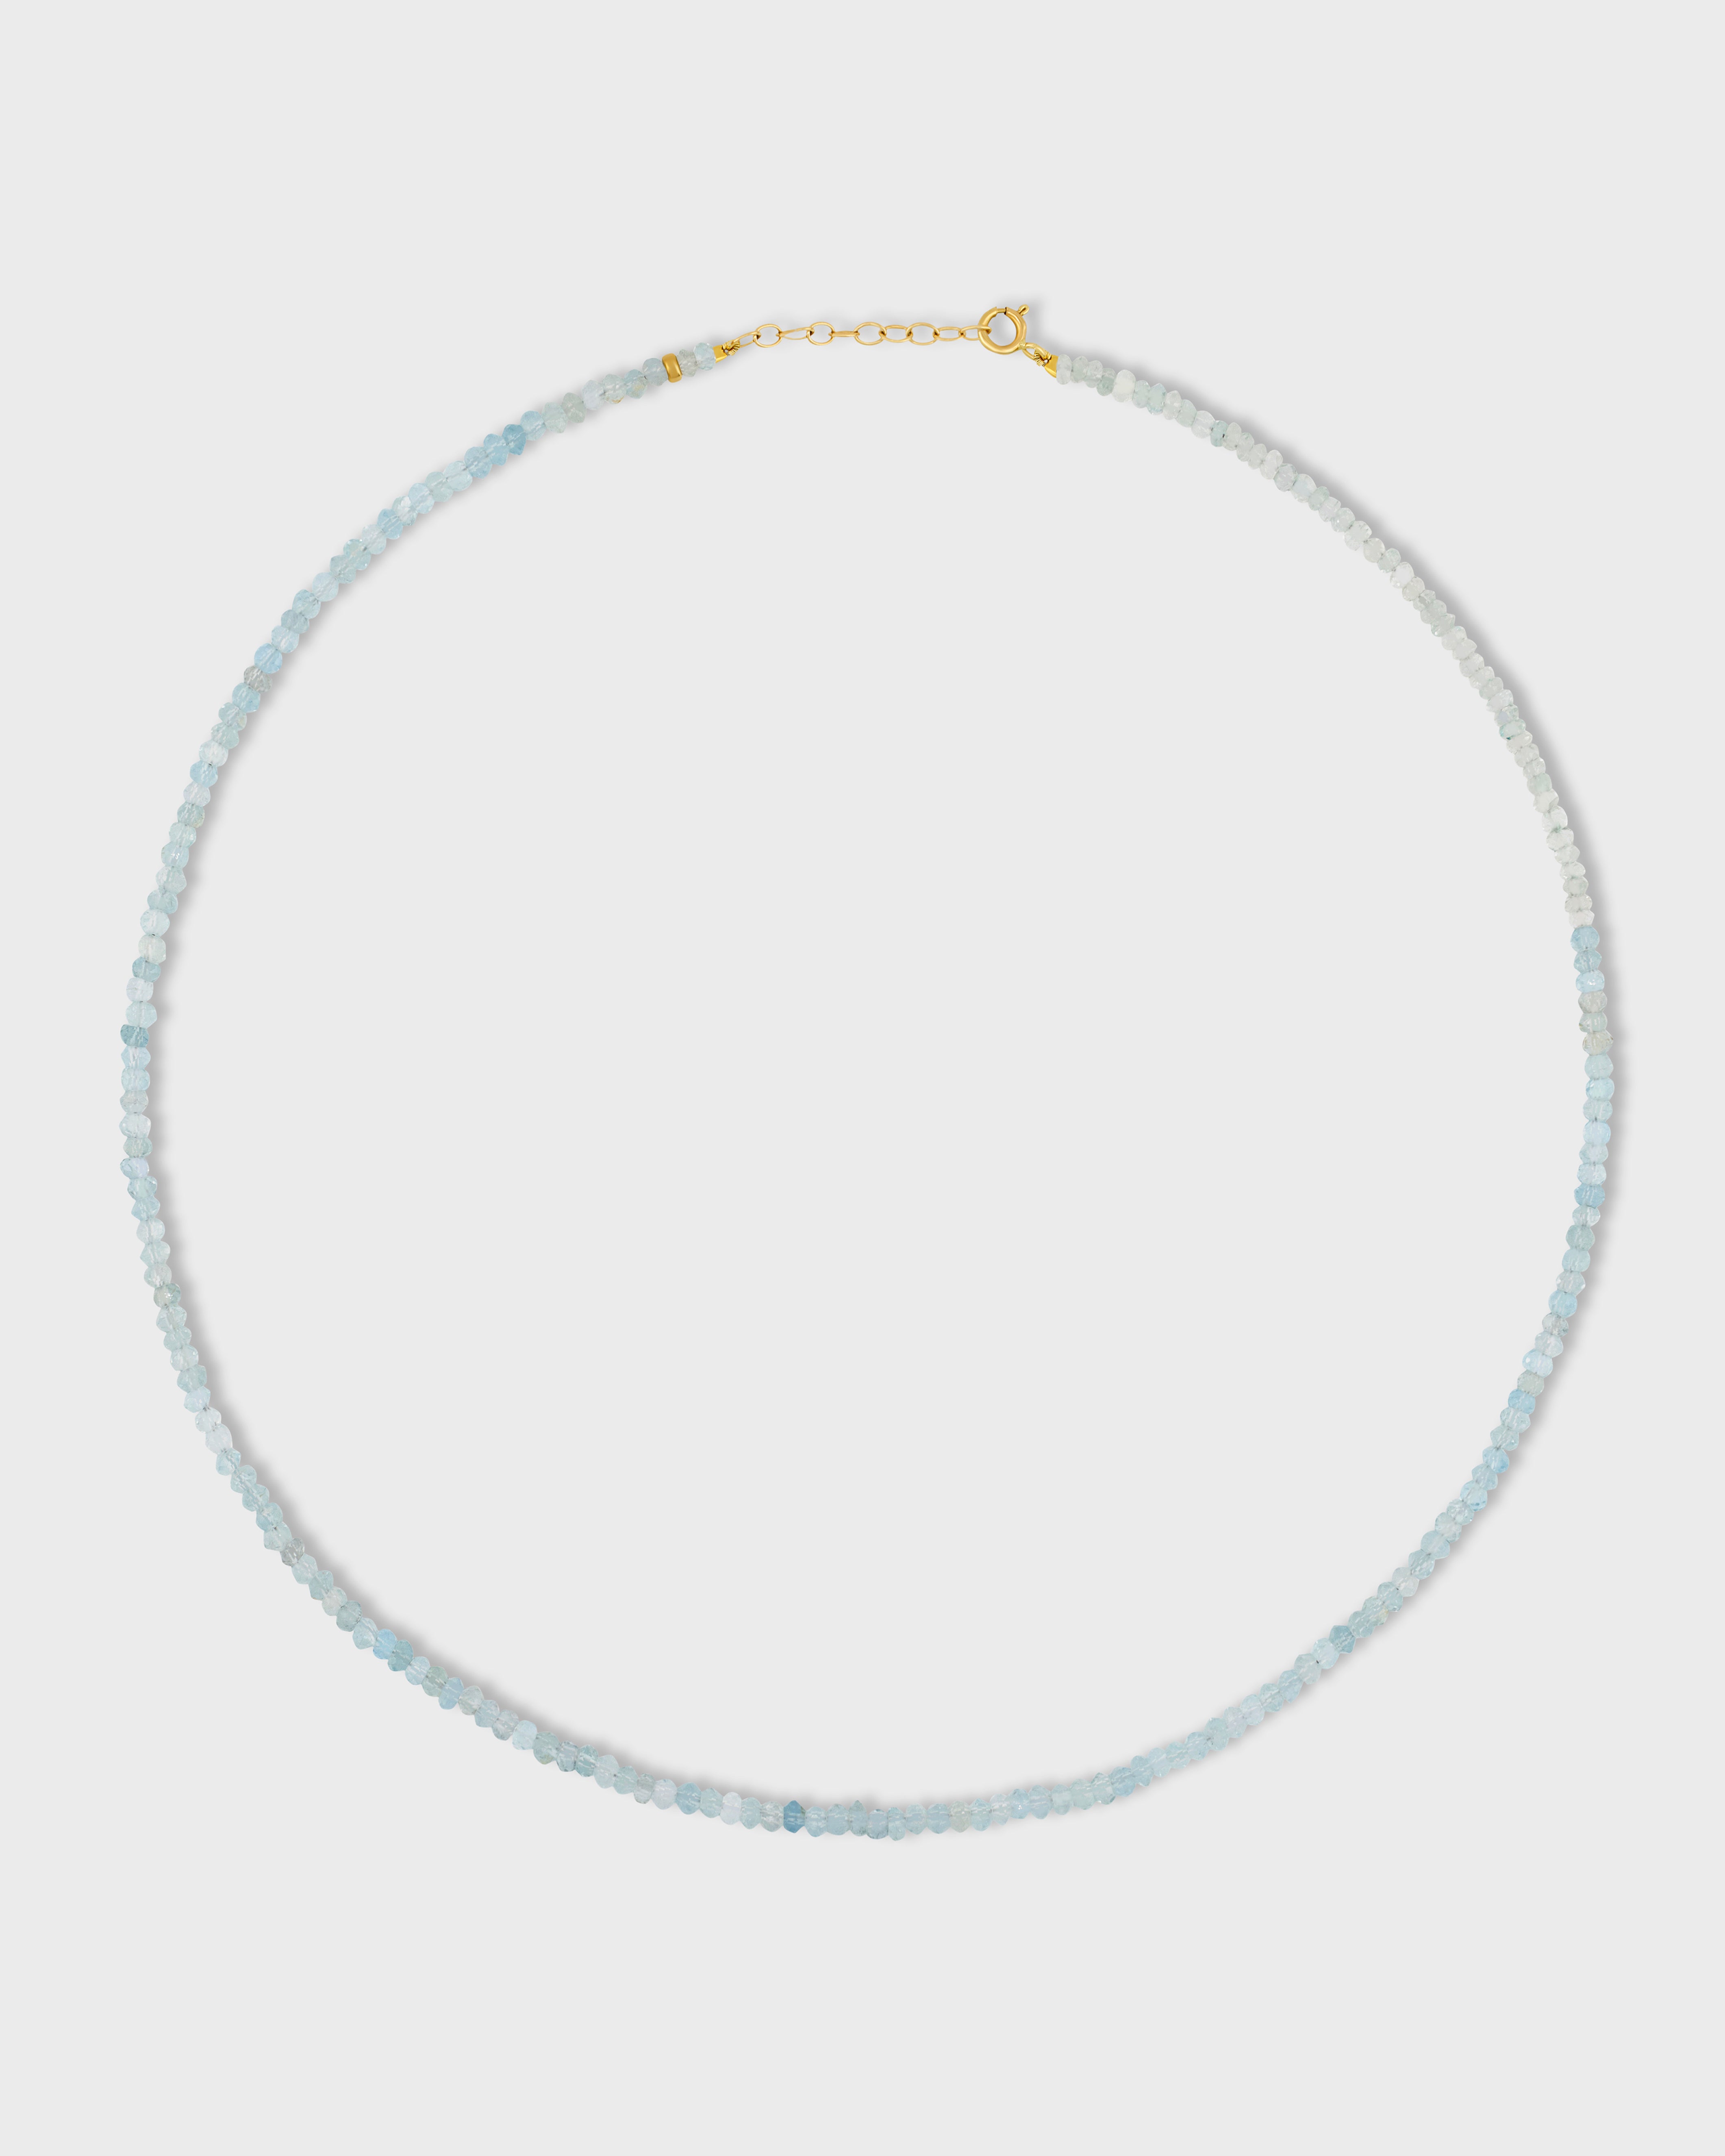 Birthstone March Aquamarine Beaded Necklace